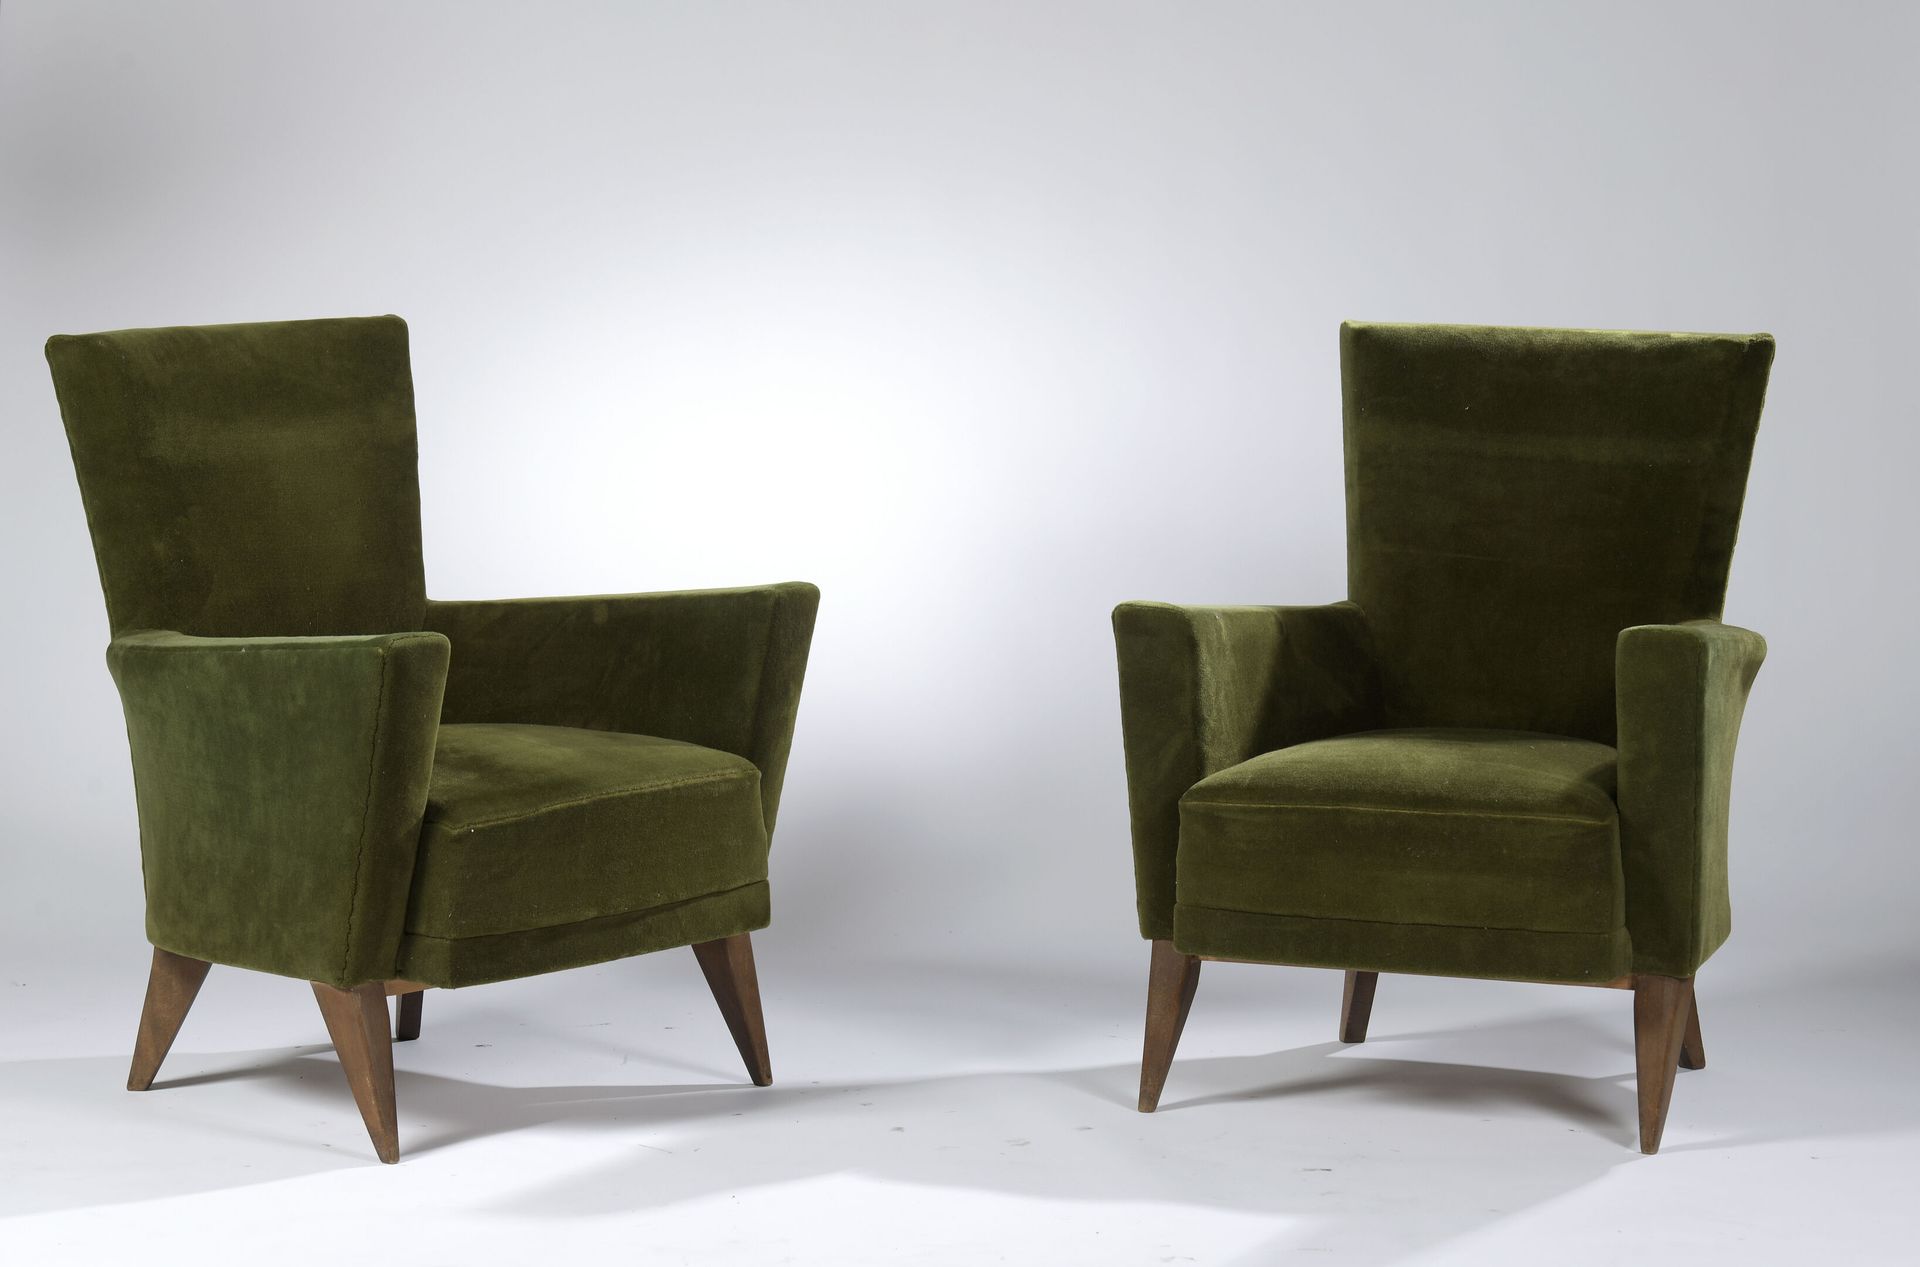 Null 1950年代的法国作品。

优雅的一对俱乐部椅子。木腿支撑着一个带有剑臂的框架，以及一个略带梯形的靠背，全部用绿色天鹅绒覆盖。

H.87厘米 - 宽&hellip;